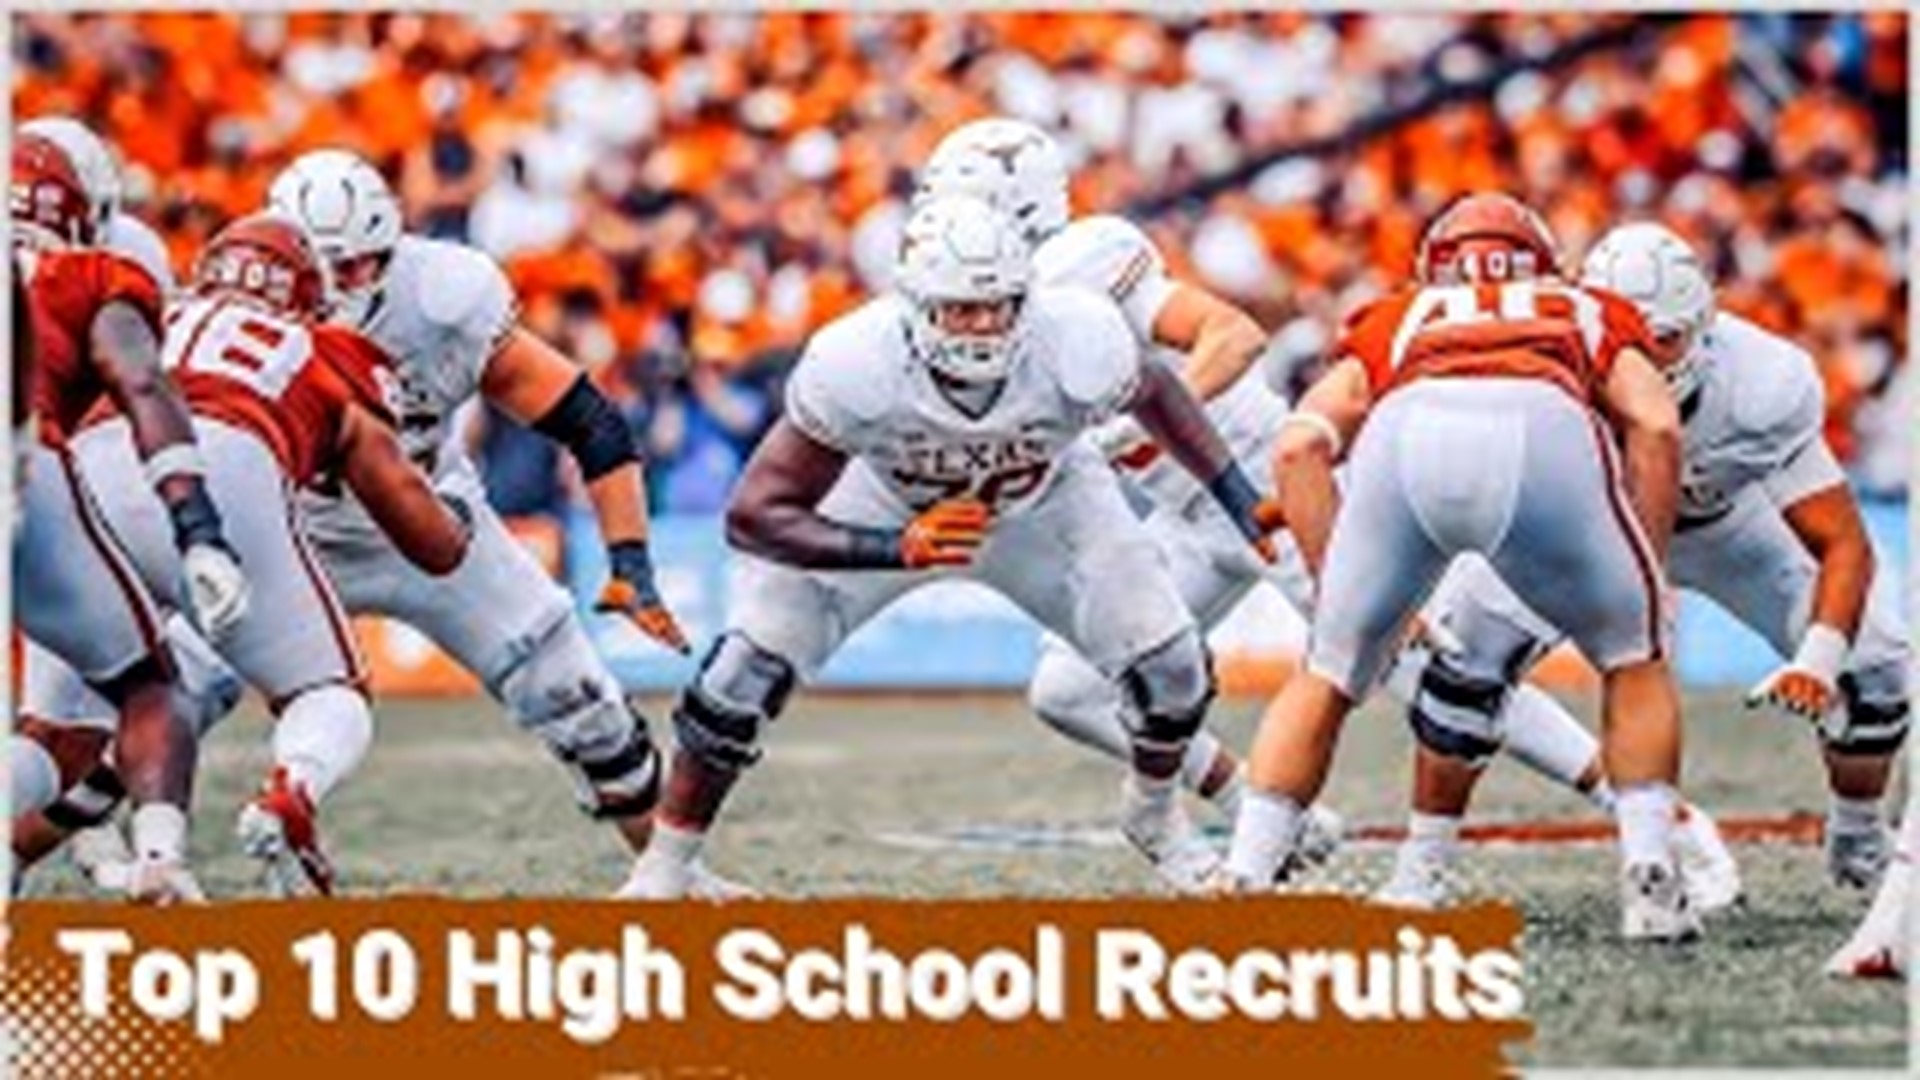 Texas Longhorns Football Team: Ranking the Top 10 High School Recruits under Steve Sarkisian